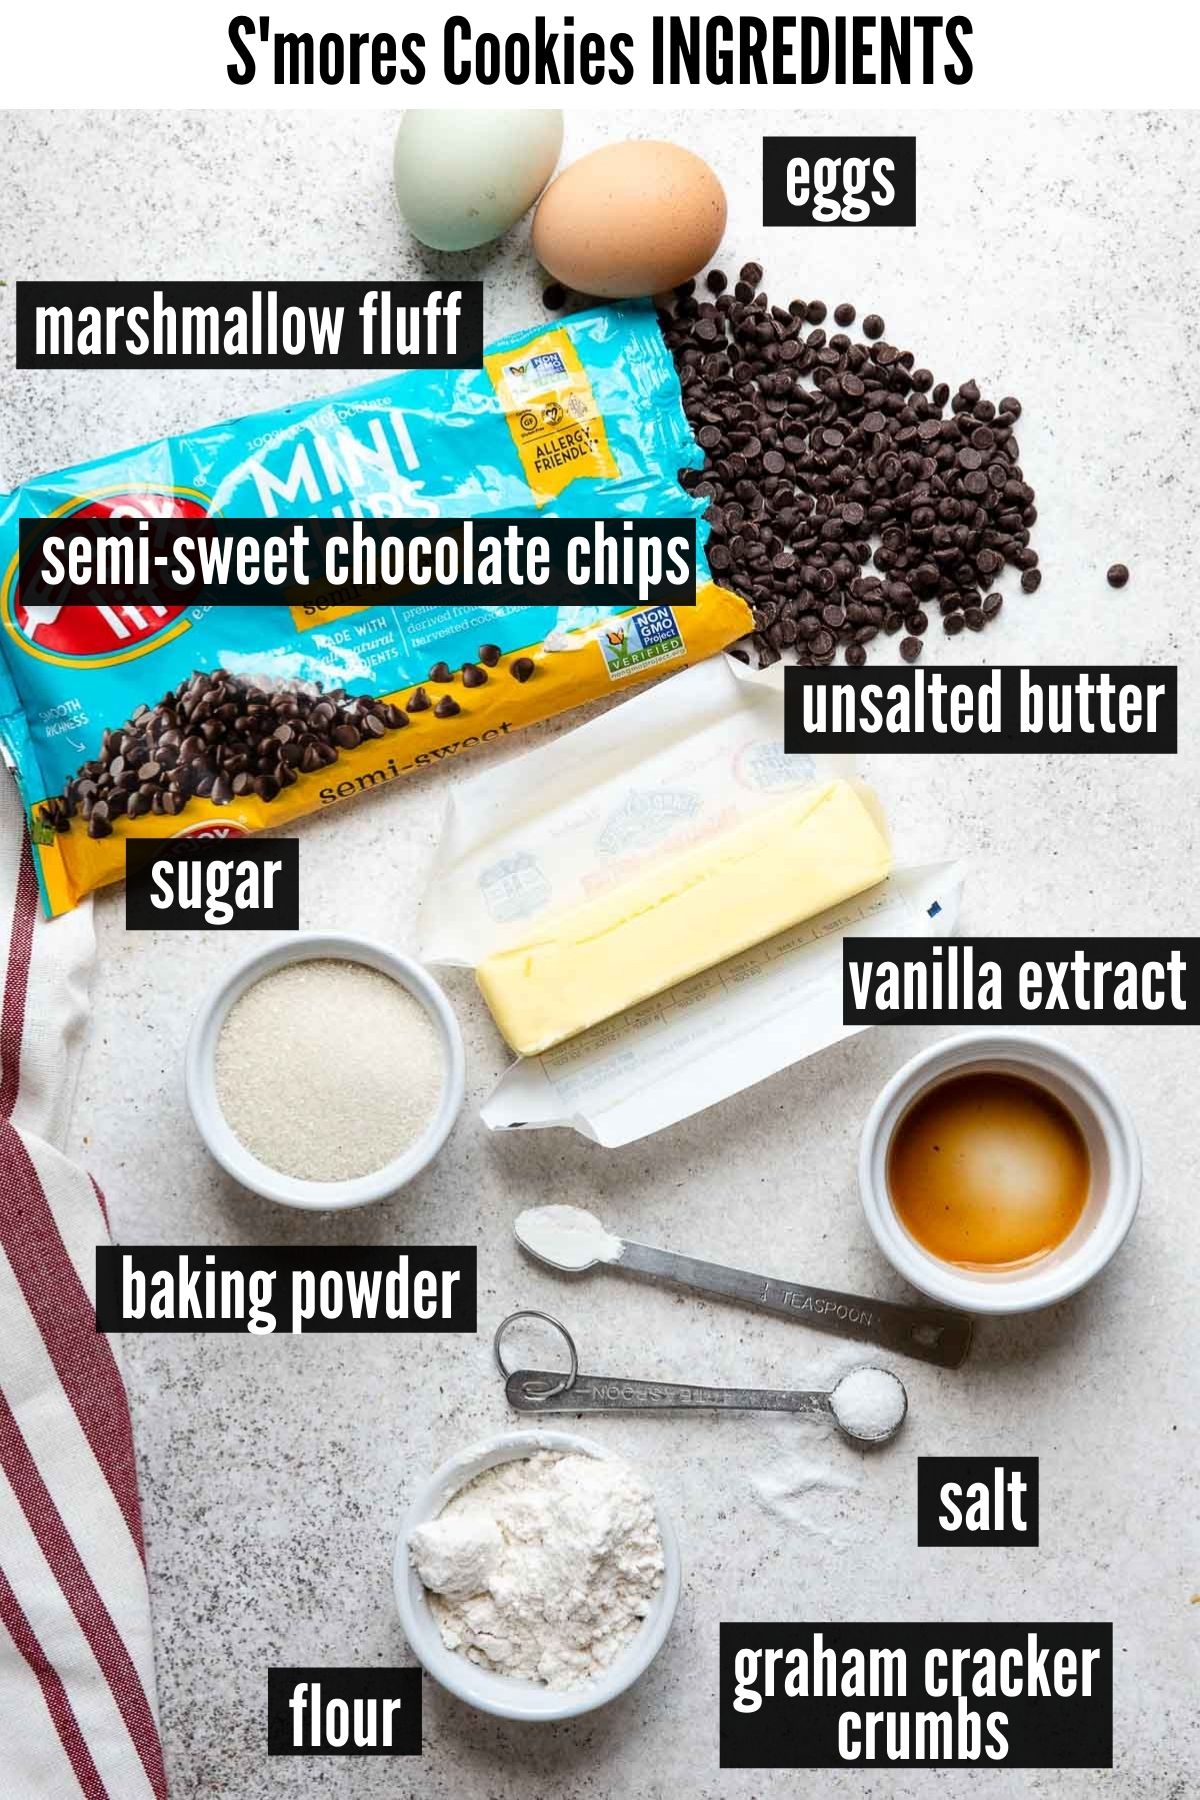 s'mores cookies labelled ingredients.